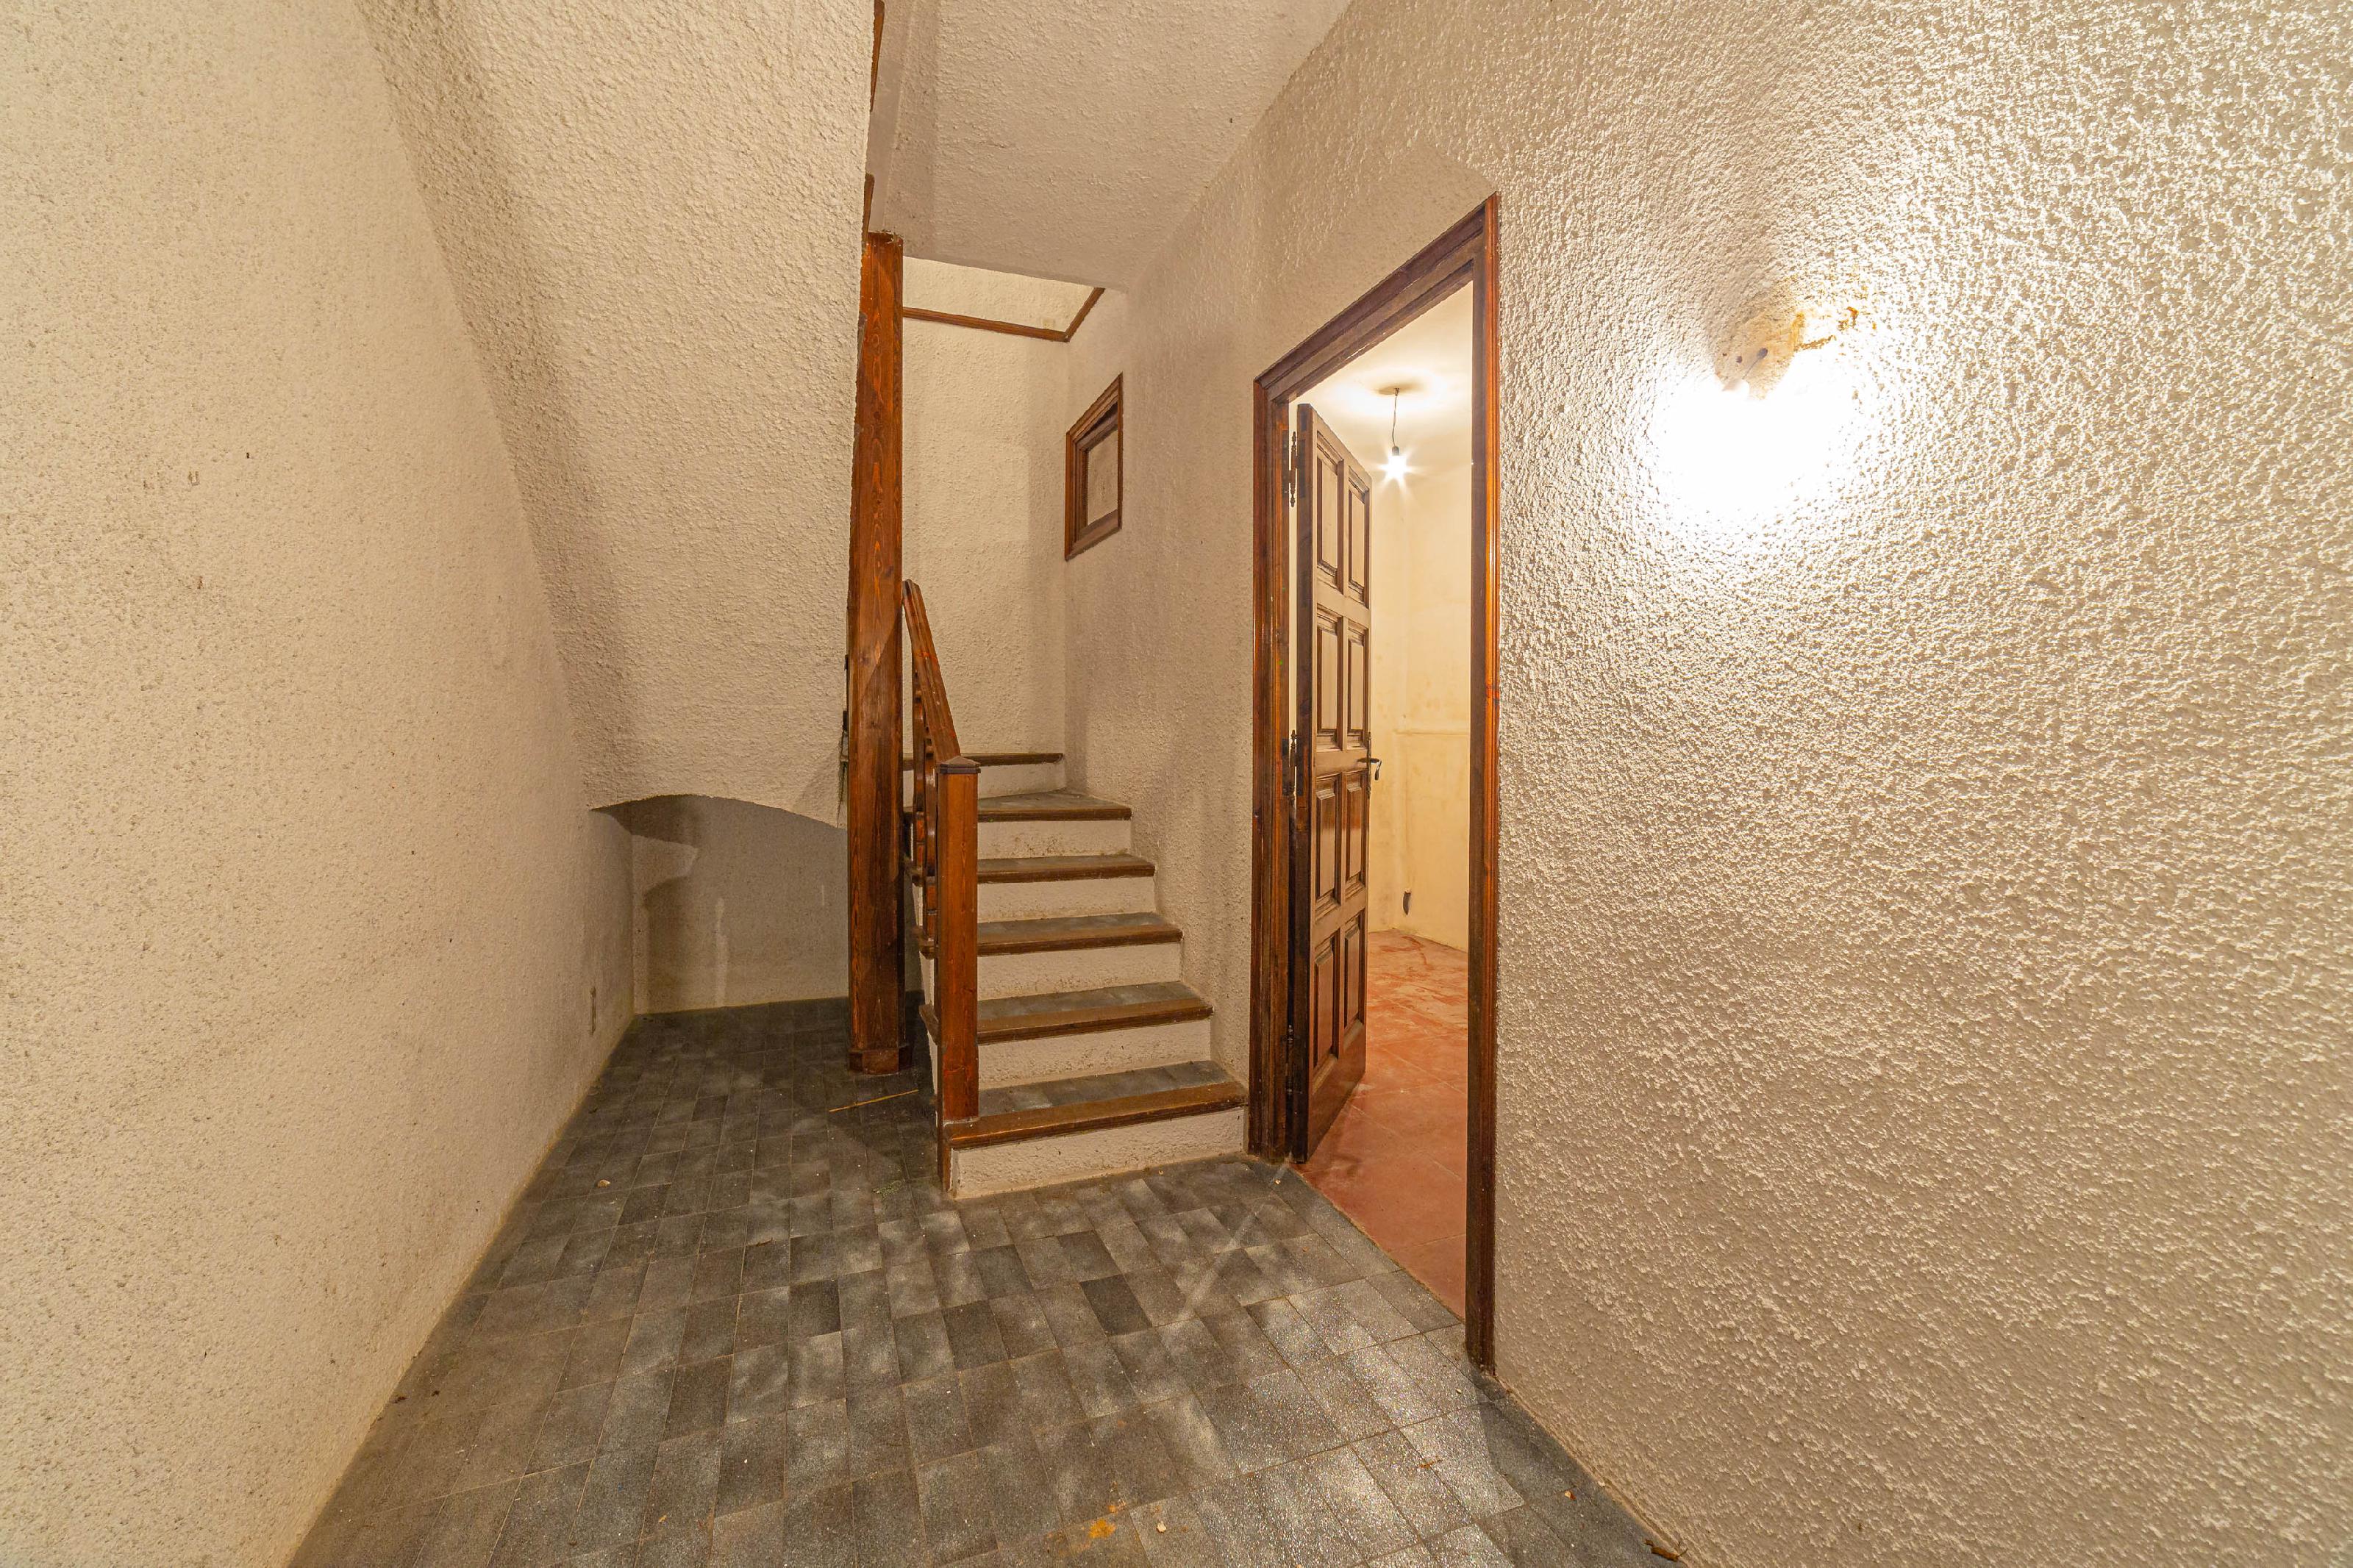 268376 Detached House for sale in La Roca del Vallès 27